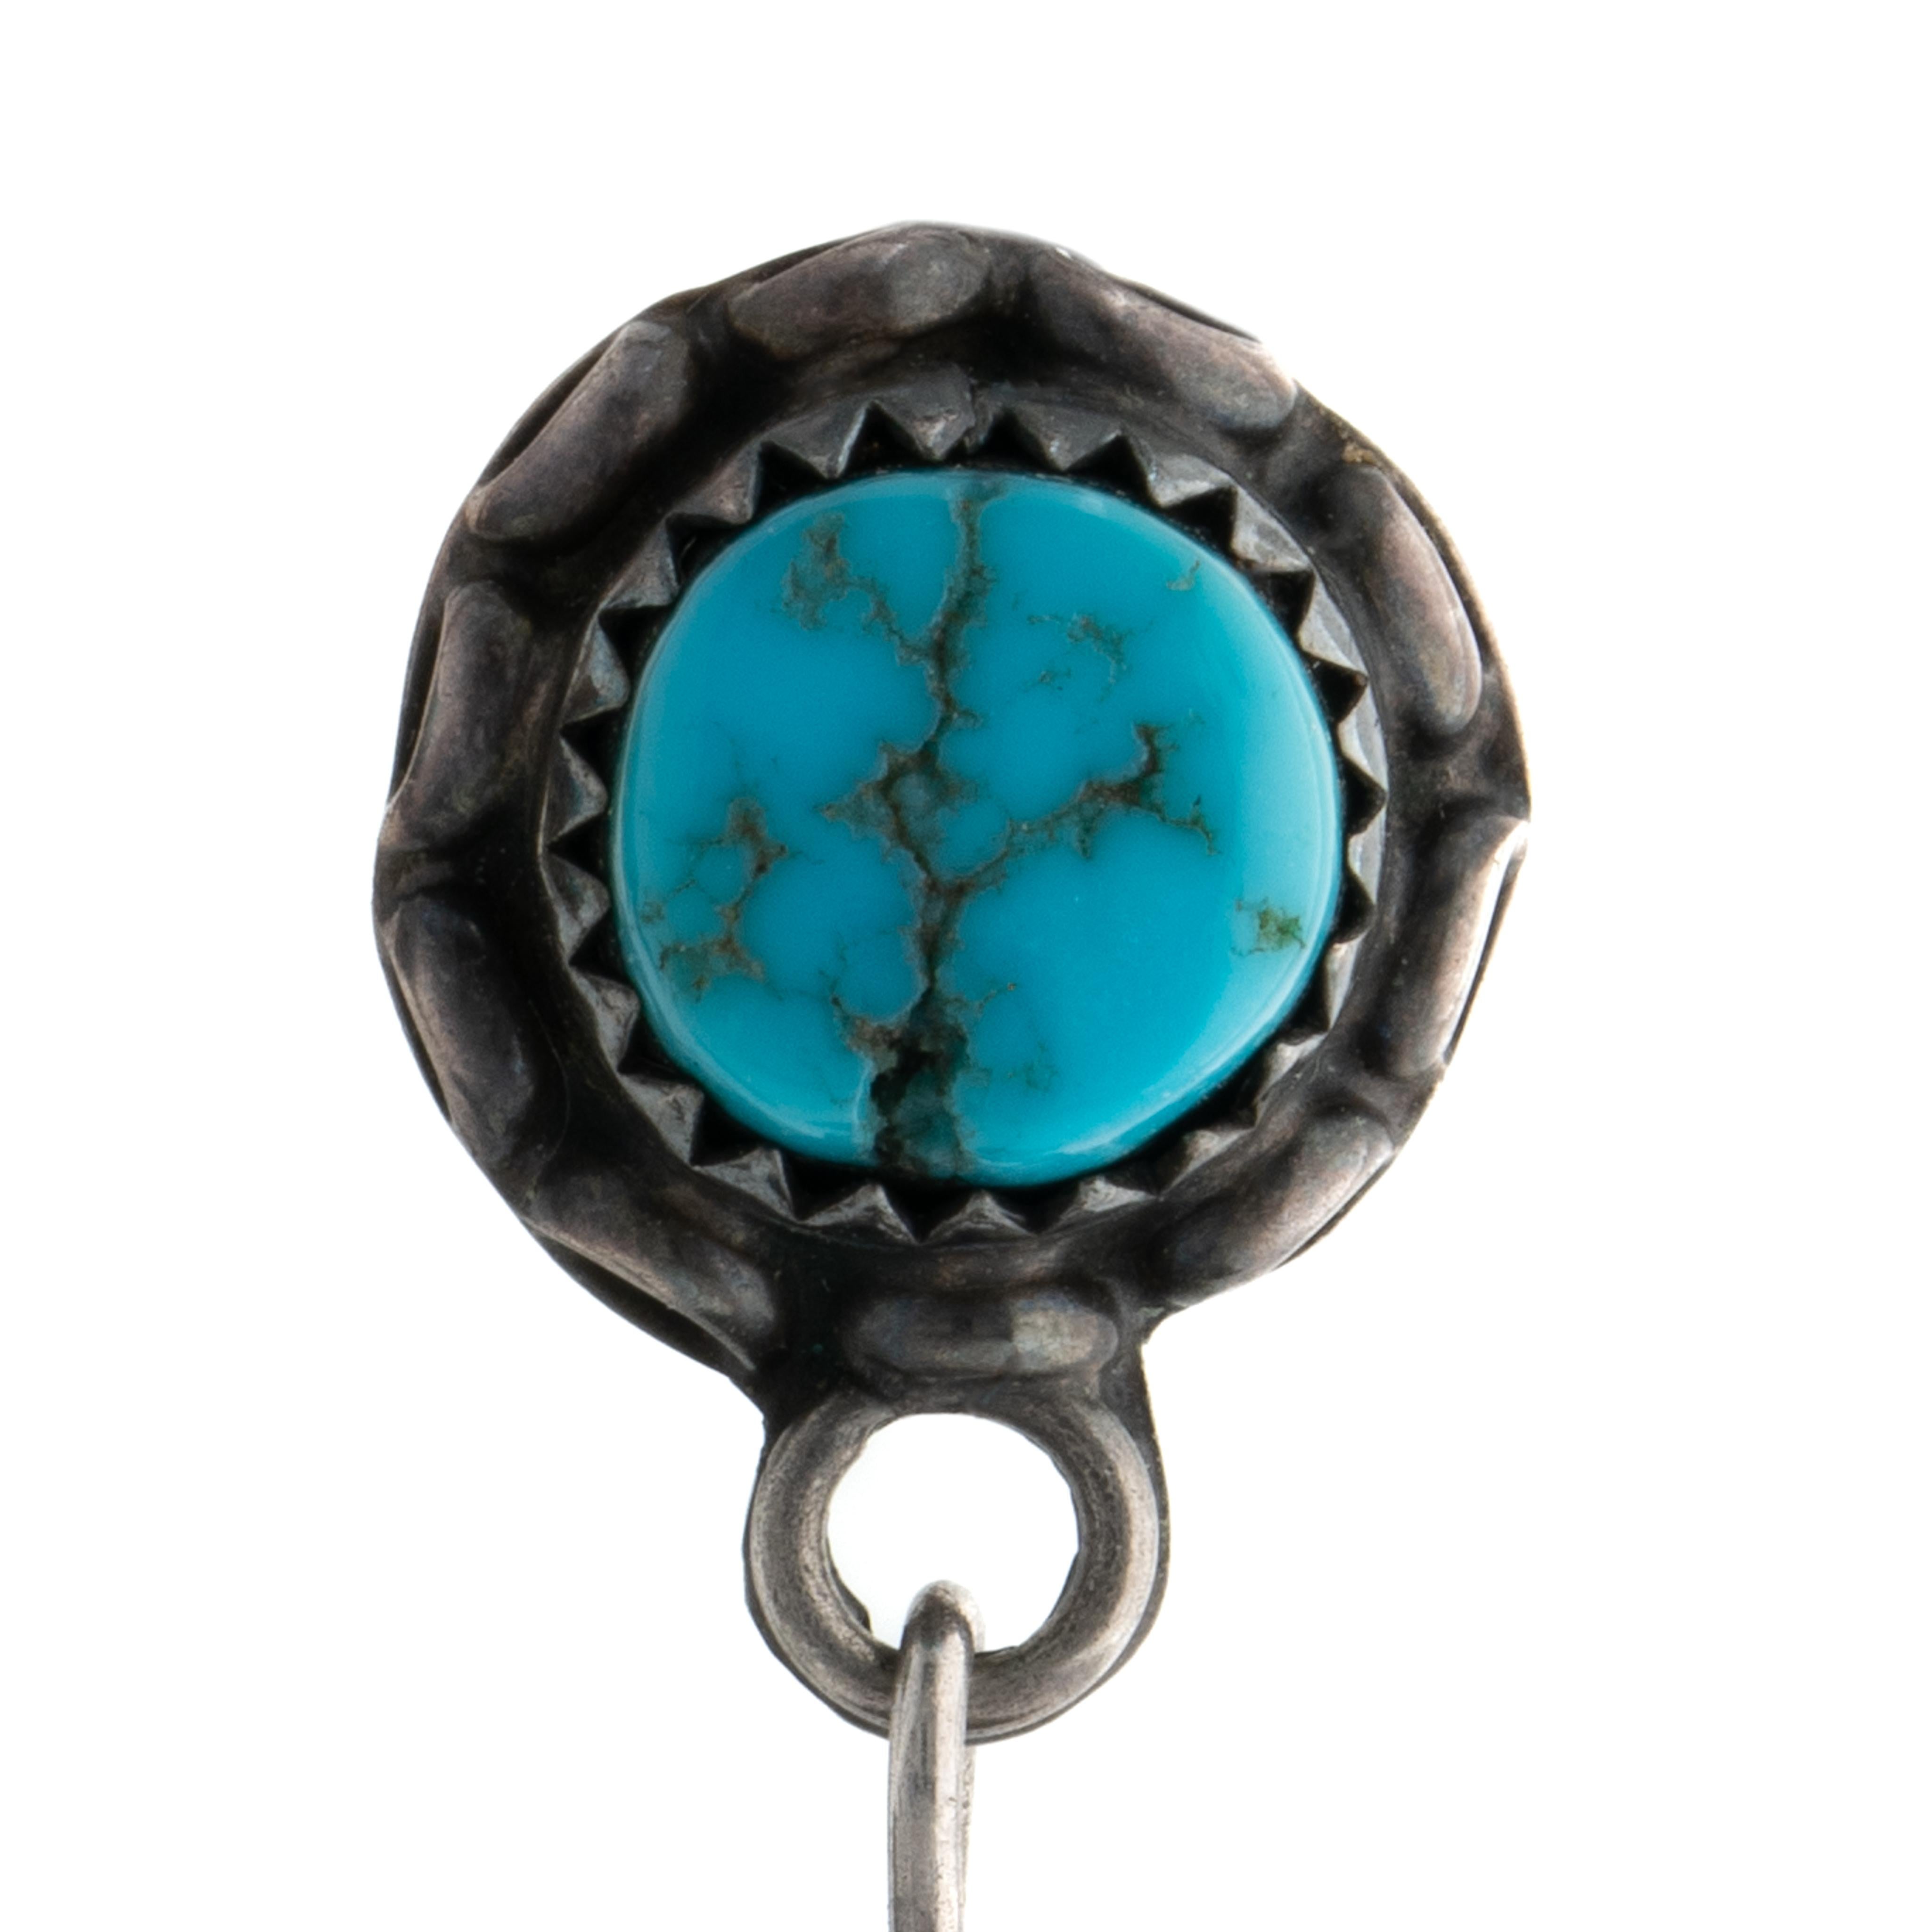 Vintage Silver Native American Navajo Double Drop Turquoise Earrings c.1950s

Each earring weighs 3.6 grams
Length: 1.01